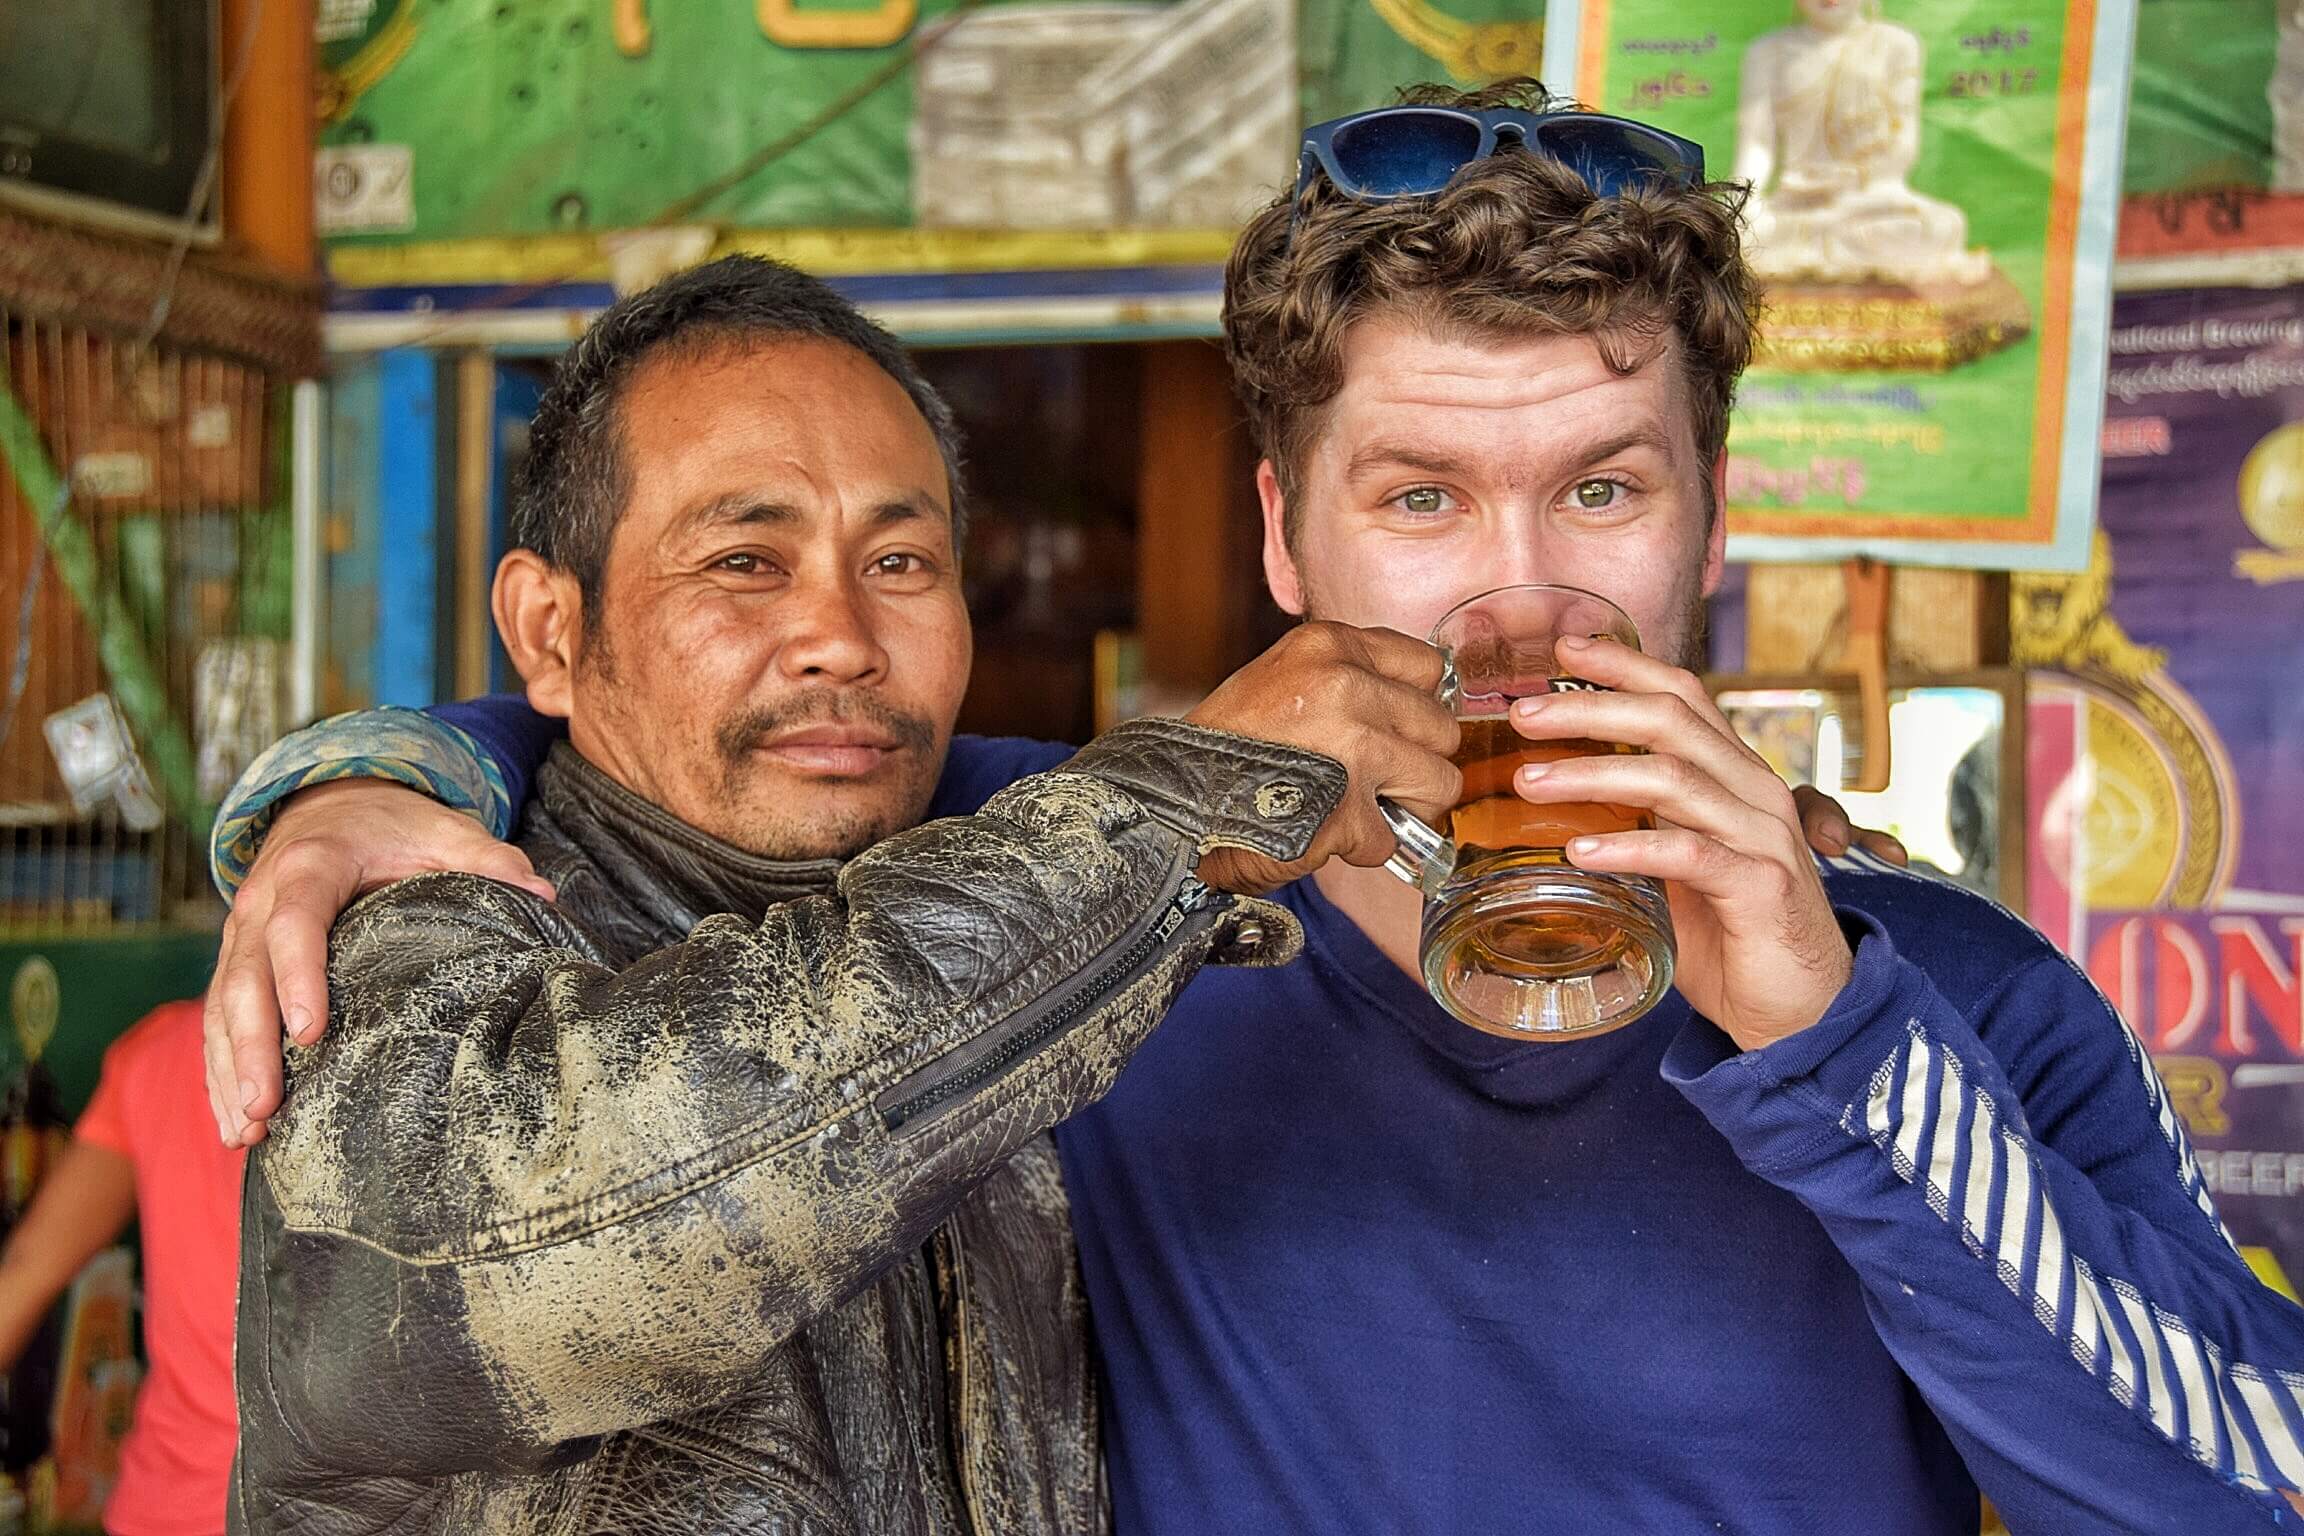 backpacker drinking beer with locals in myanmar